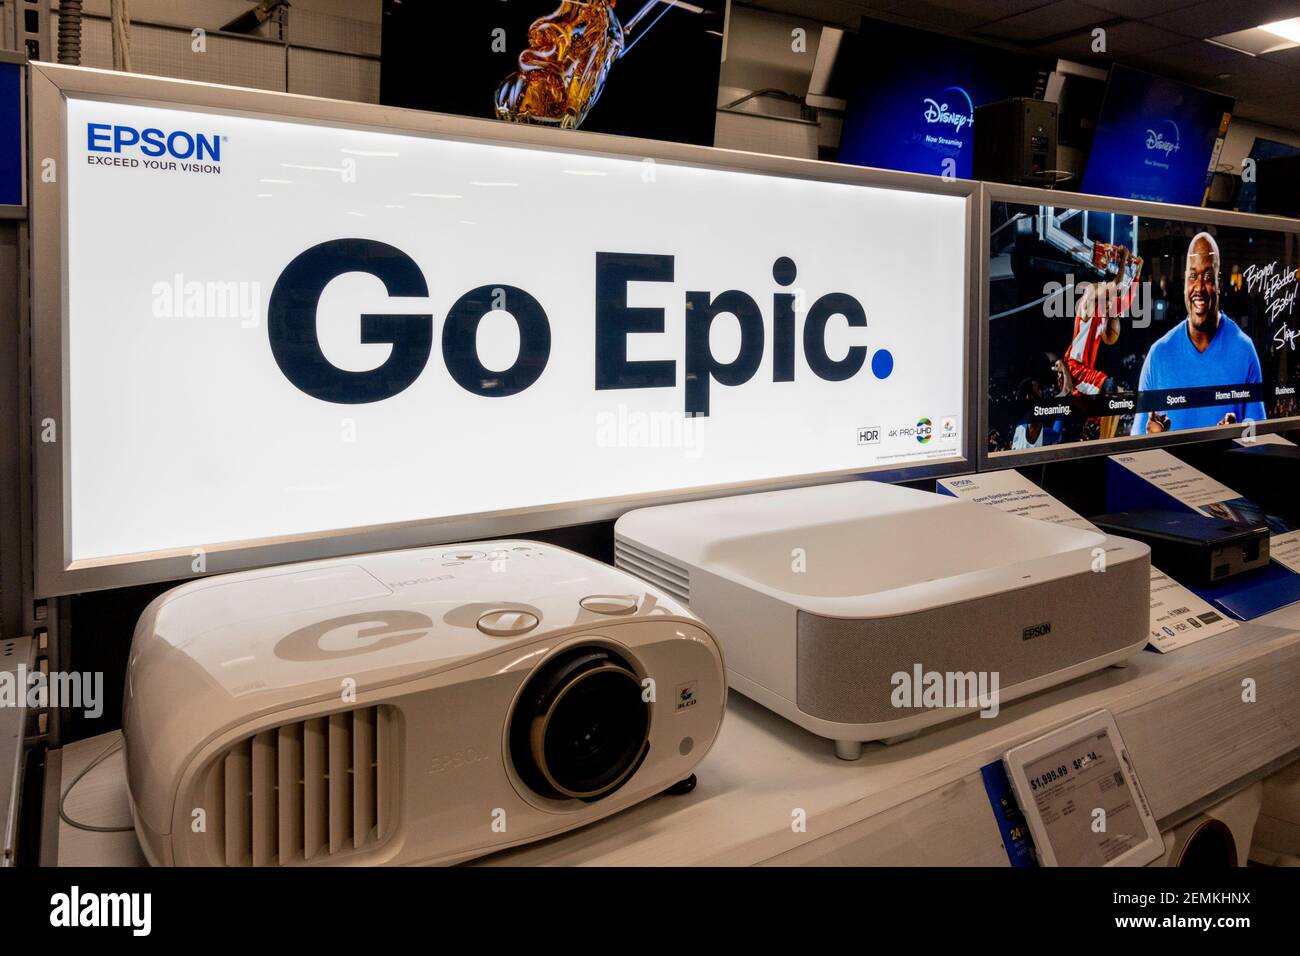 Best Buy Creates In-Store “Specialty Retailer” Experience Shops - Digital  Imaging Reporter